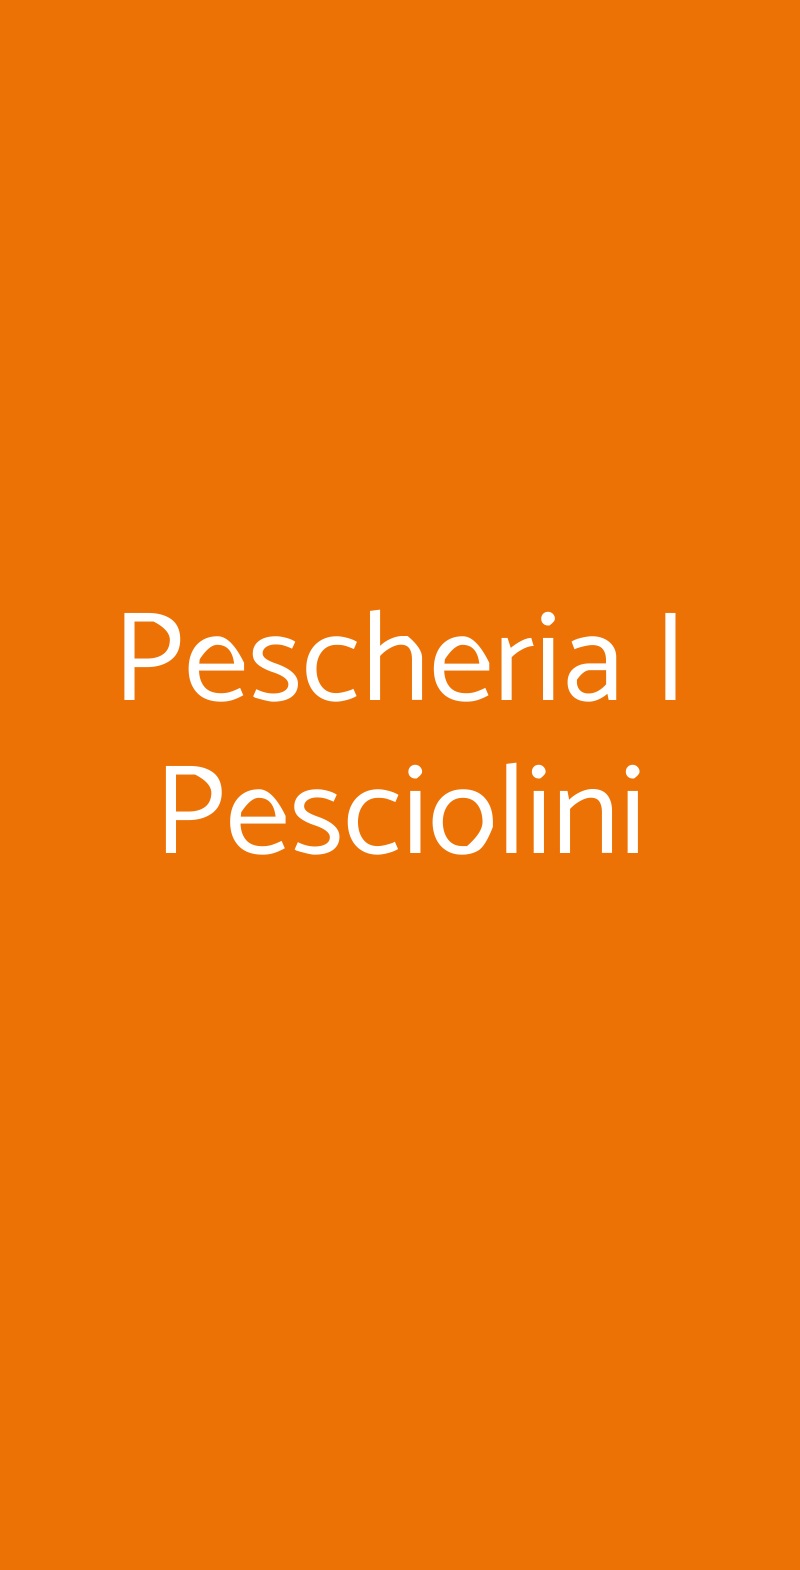 Pescheria I Pesciolini Milano menù 1 pagina